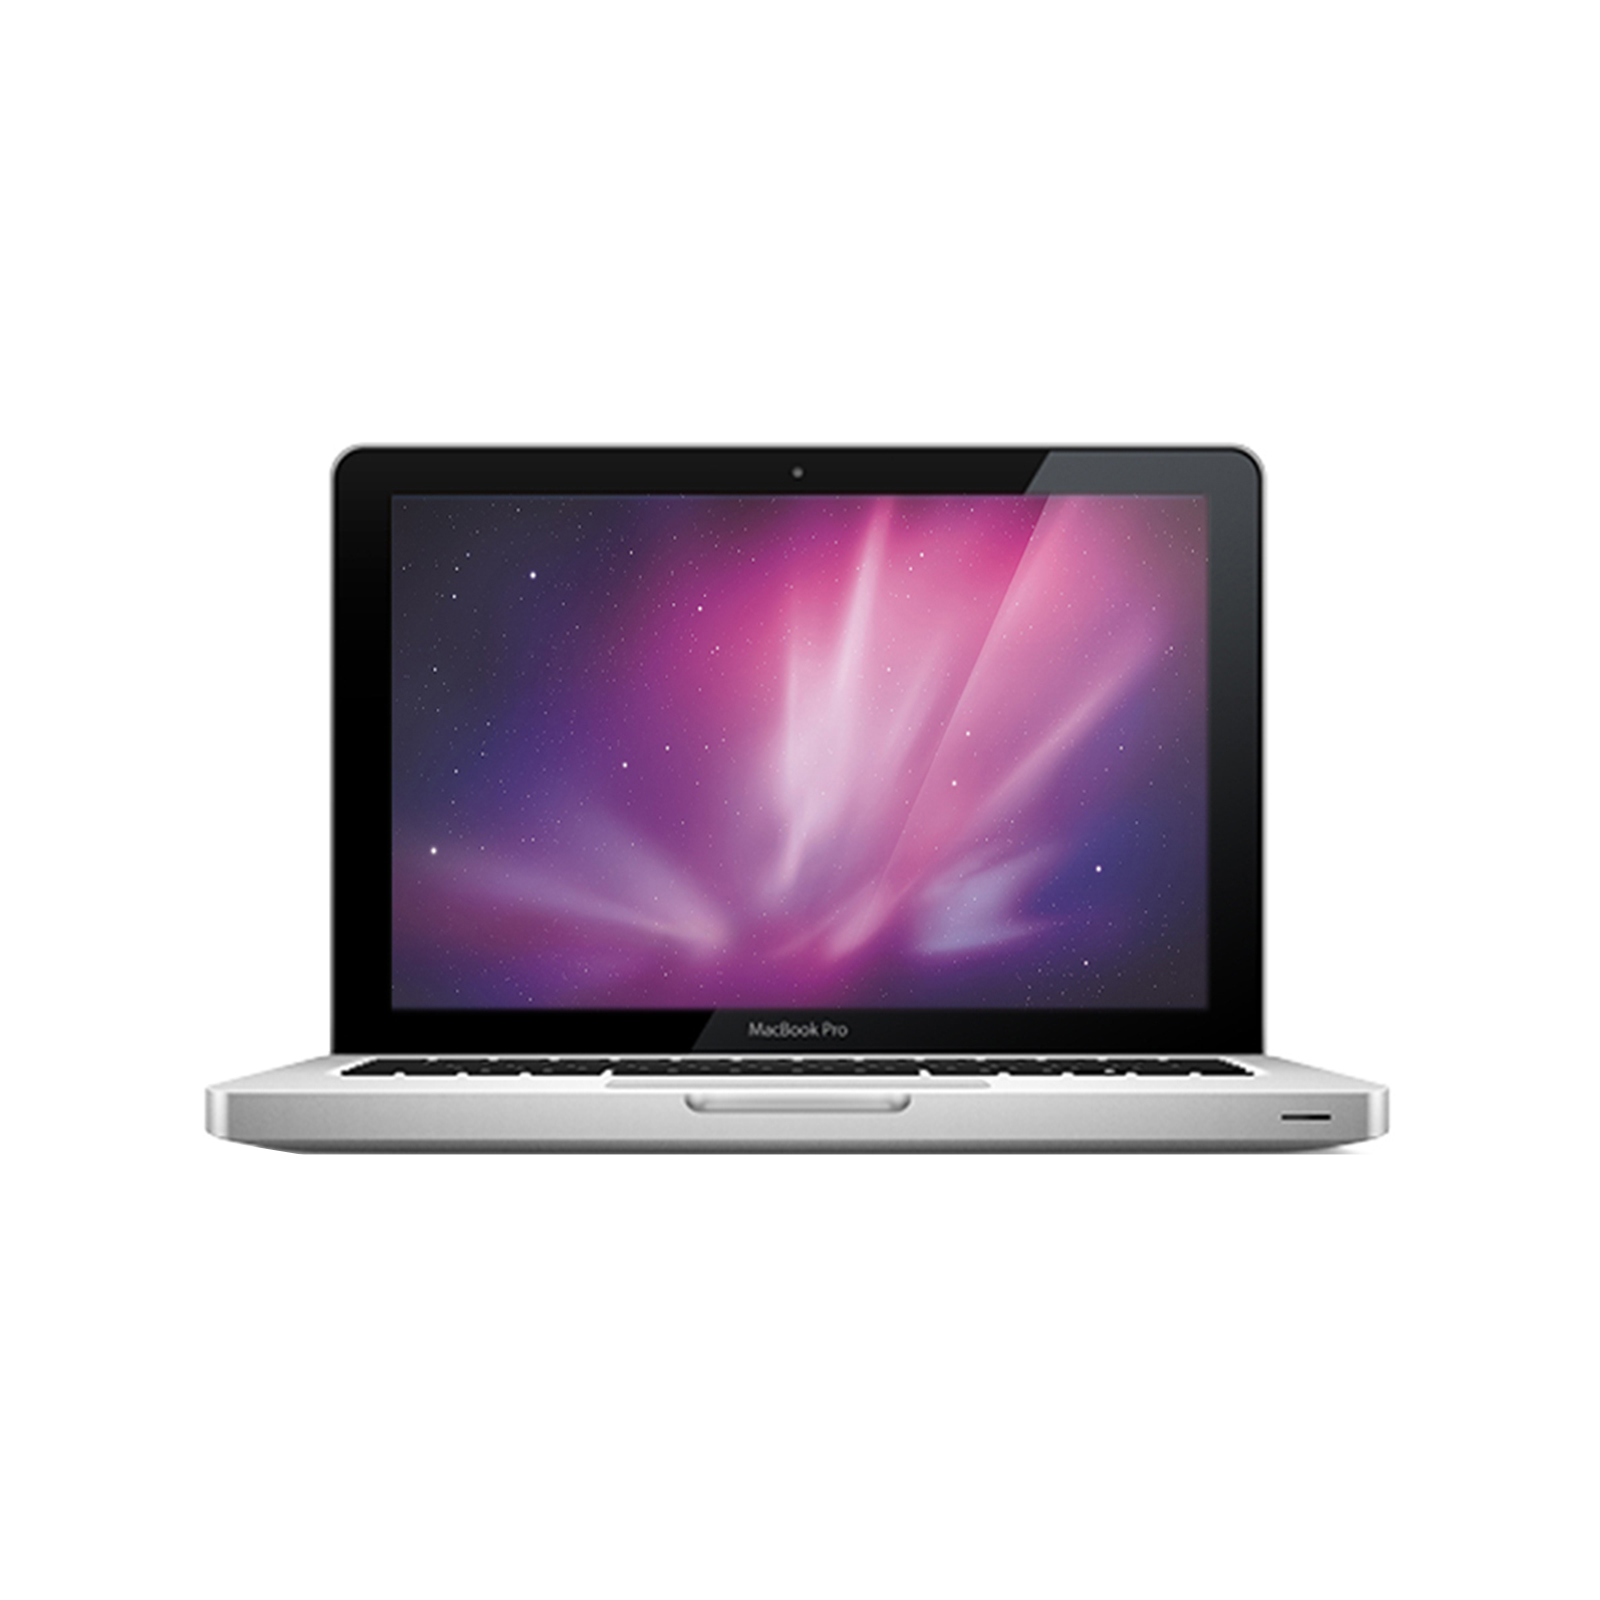 MacBook Pro (15-inch, Late 2011) Intel Core i7 2.2 GHz 8GB 500GB - Apple